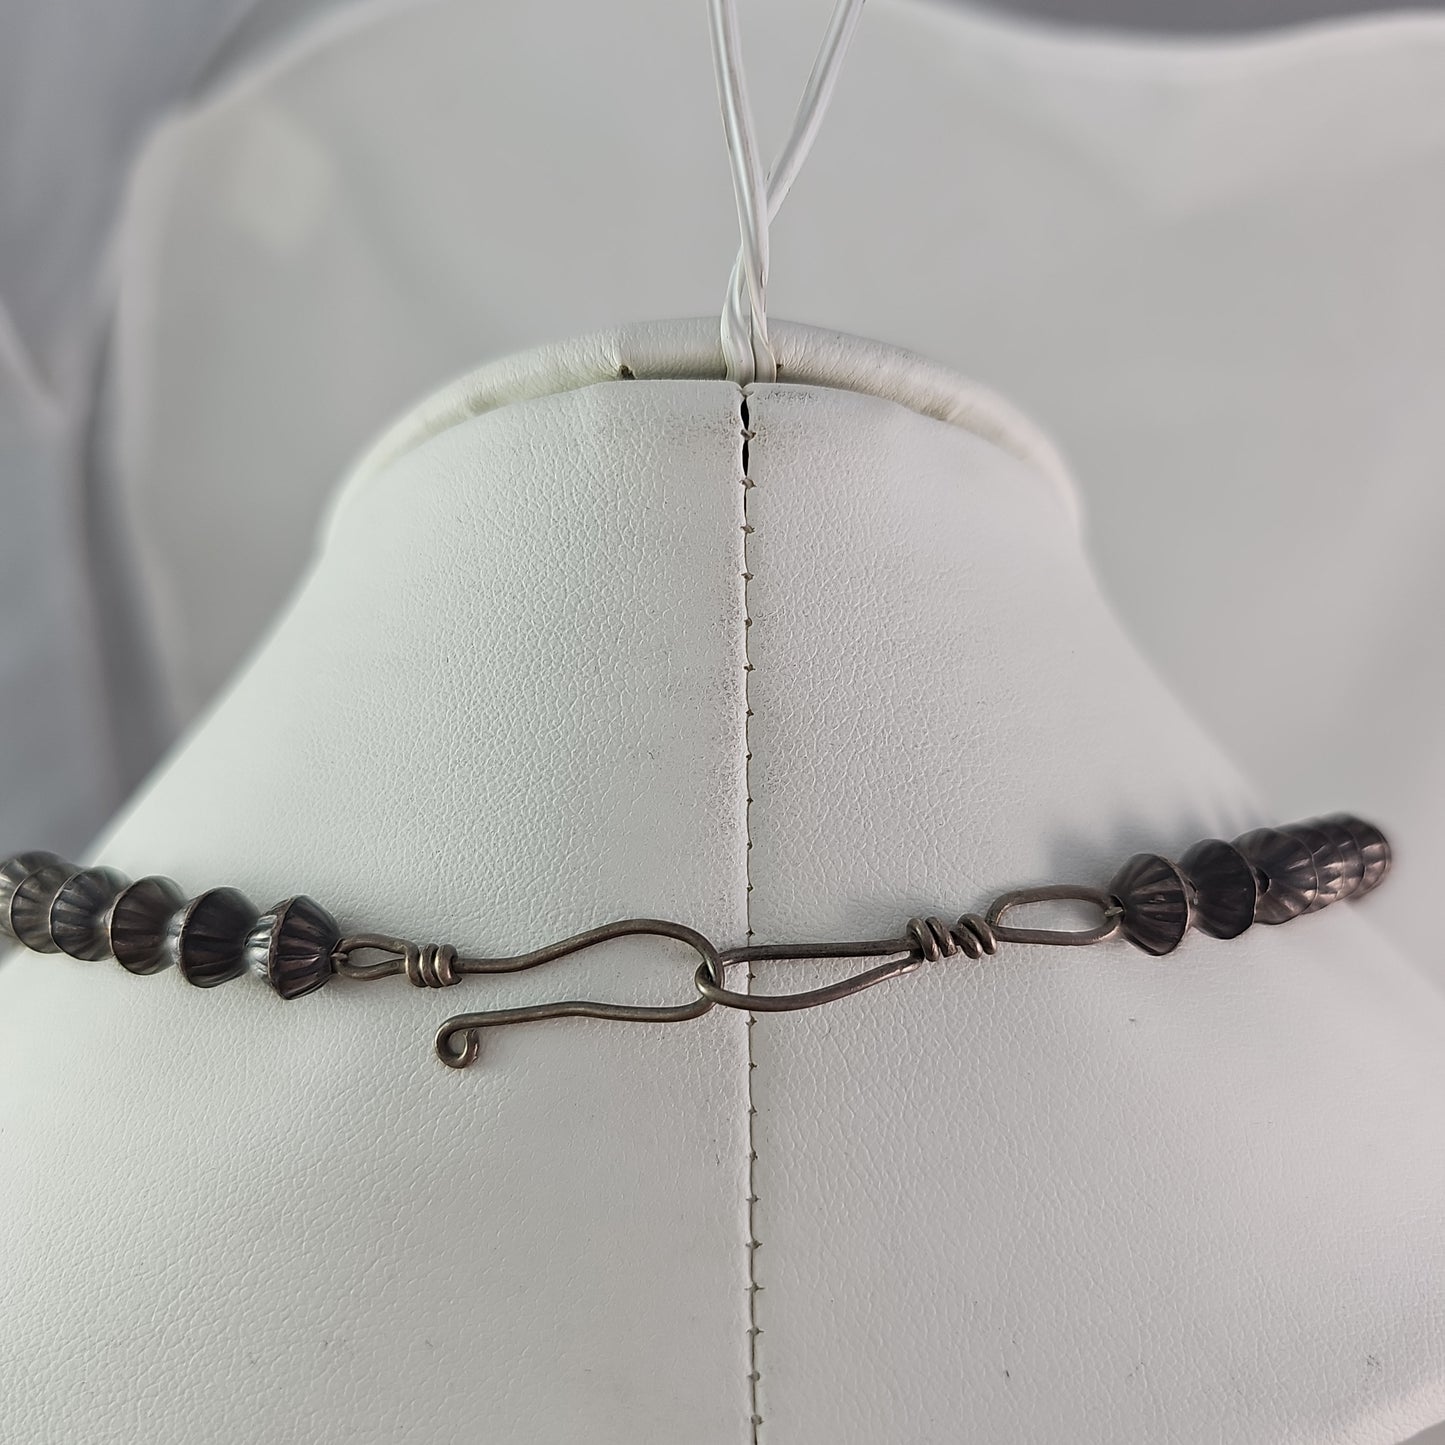 Vintage Zuni squash blossom necklace